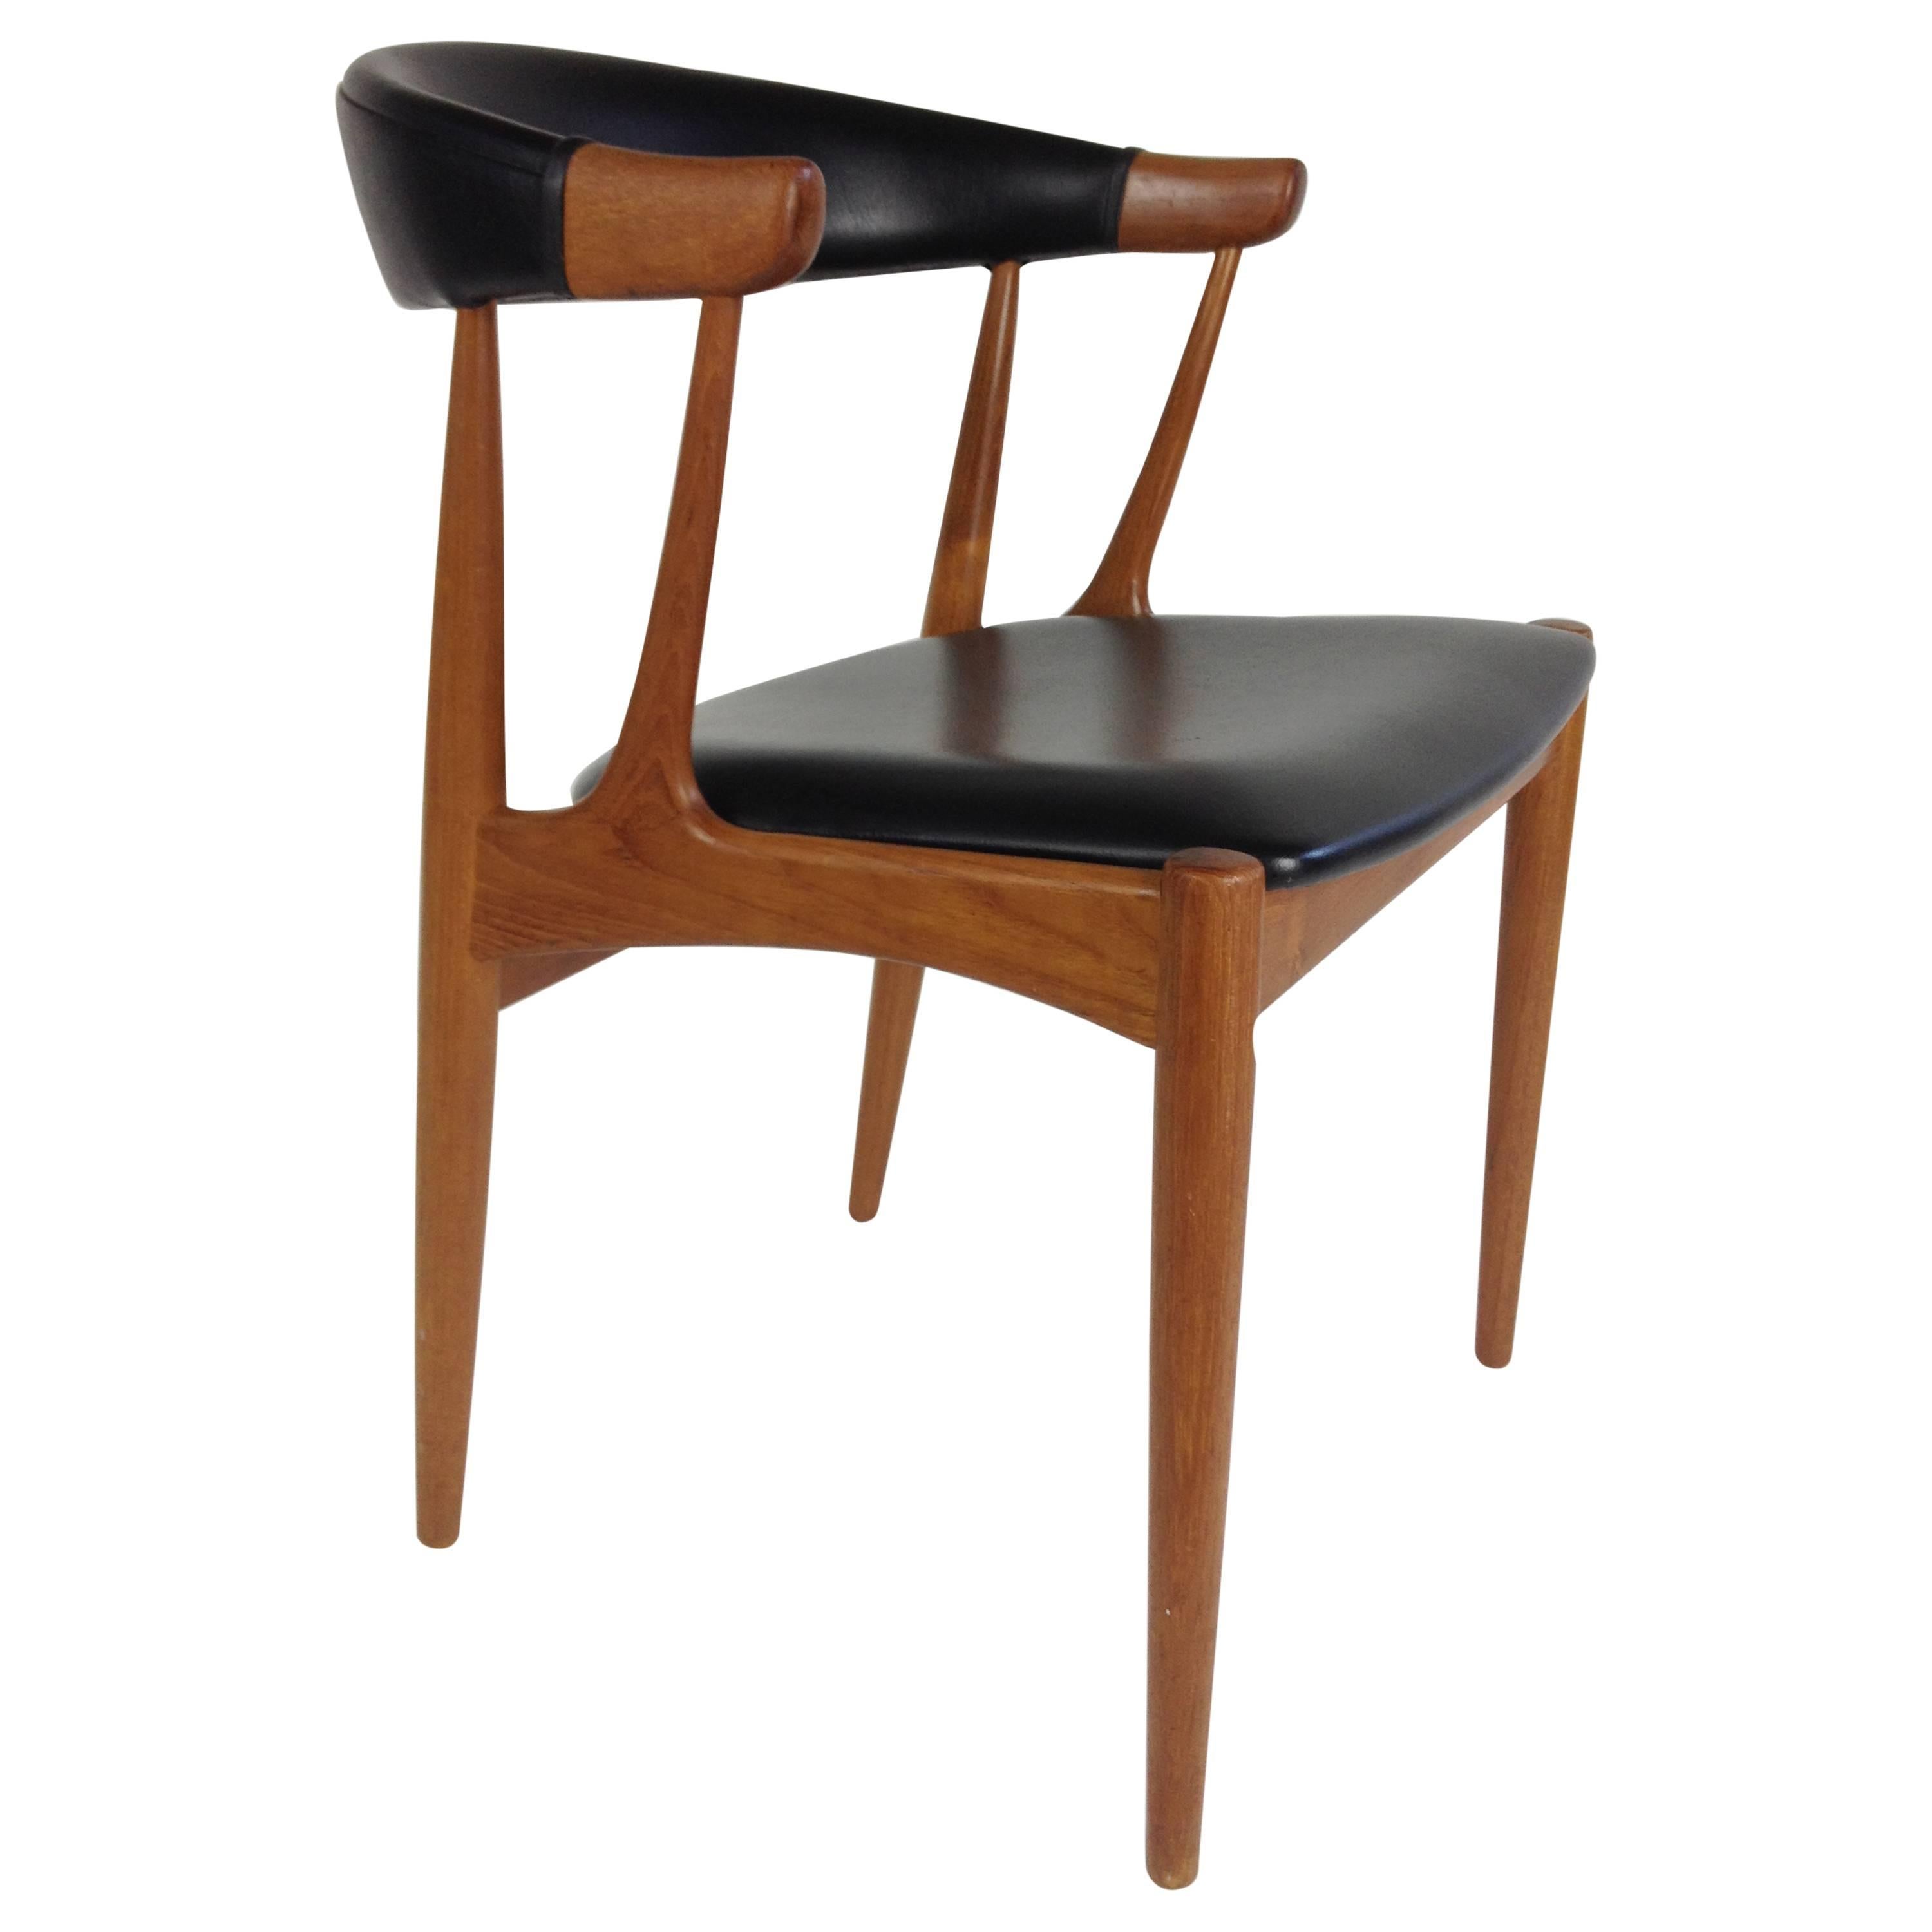 Striking Mid-Century Modern Teak Chair Designed by Johannes Andersen - Denmark For Sale